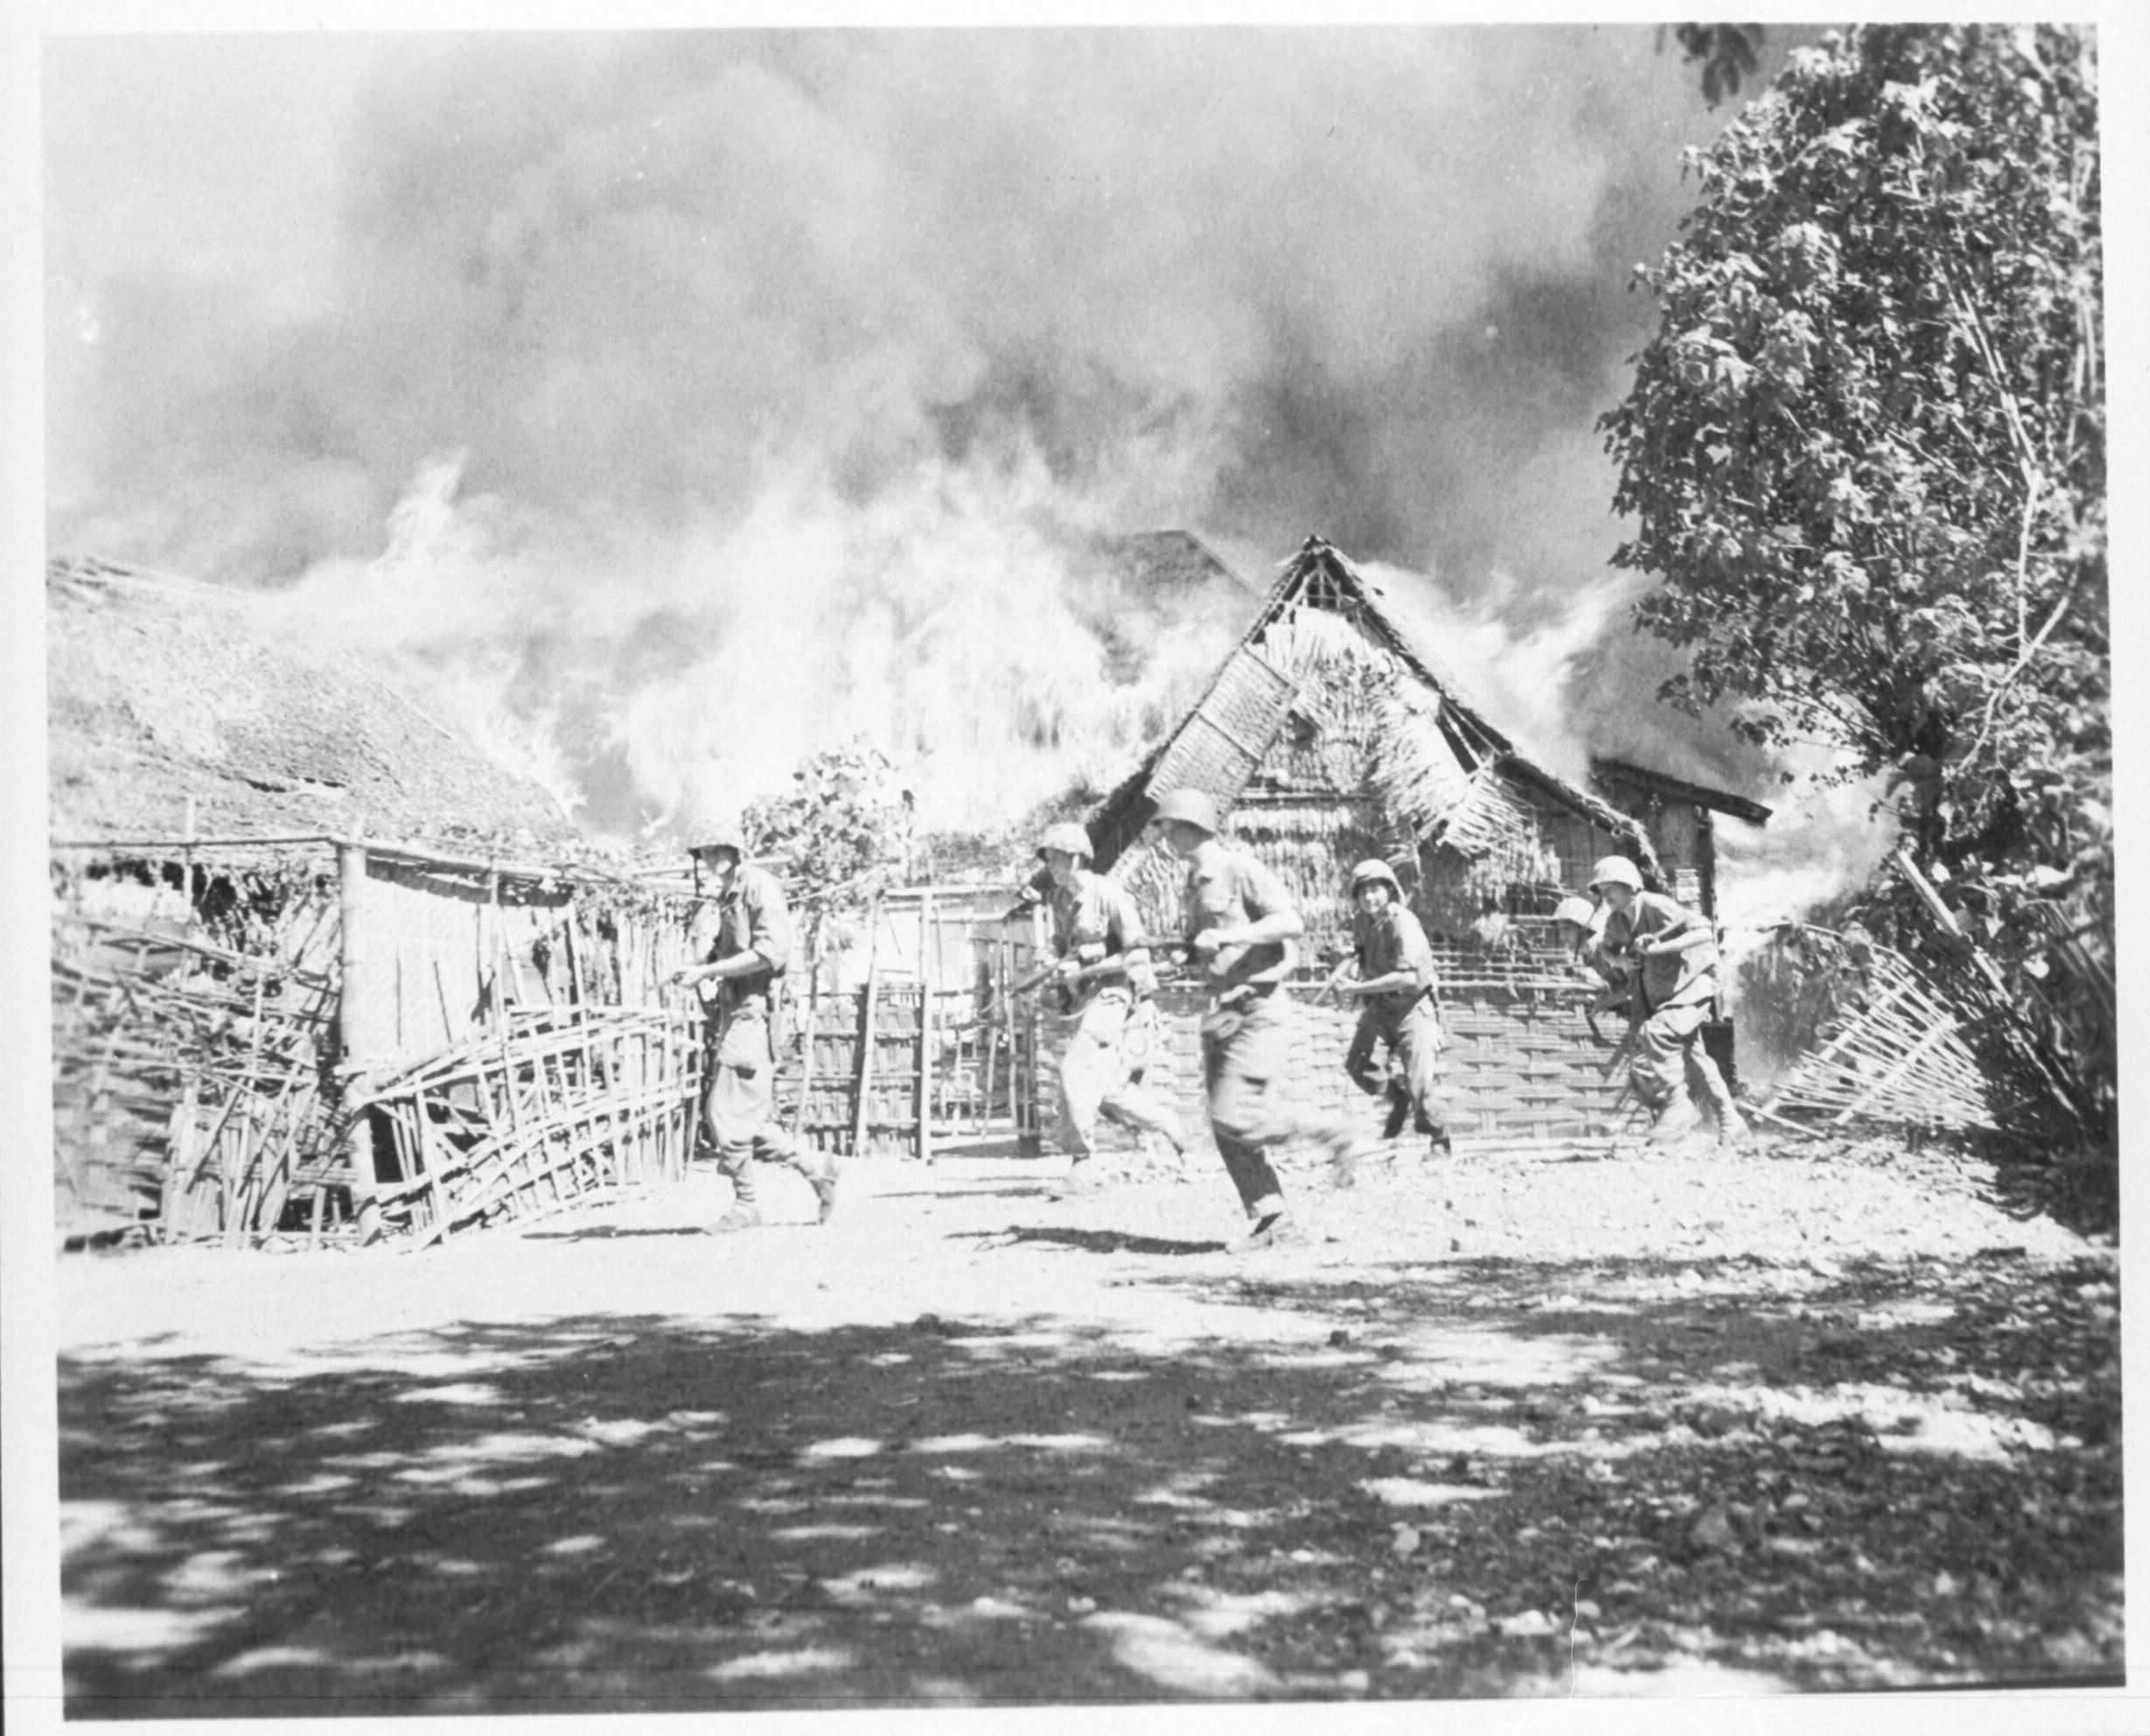 Mariniers rennen langs een brandende kampong, omgeving Surabaya, Oost-Java, 22 juni 1946. Mariniersfotograaf Hugo Wilmar/NIMH.